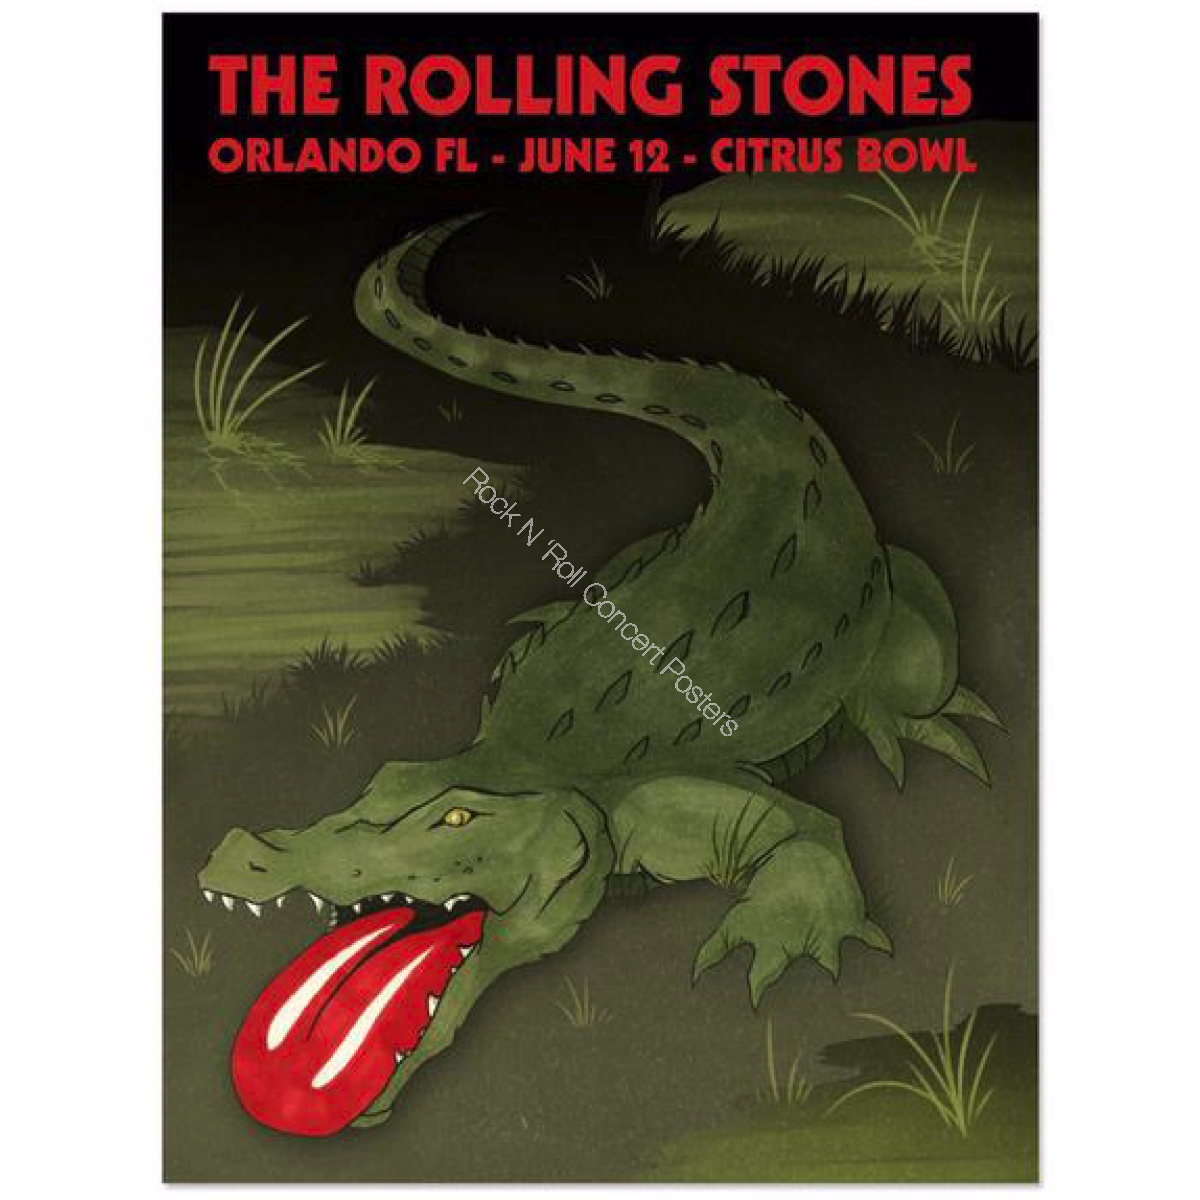 Rolling Stones Citrus Bowl Orlando Florida 6/12/15 Original Concert Poster Hand Numbered